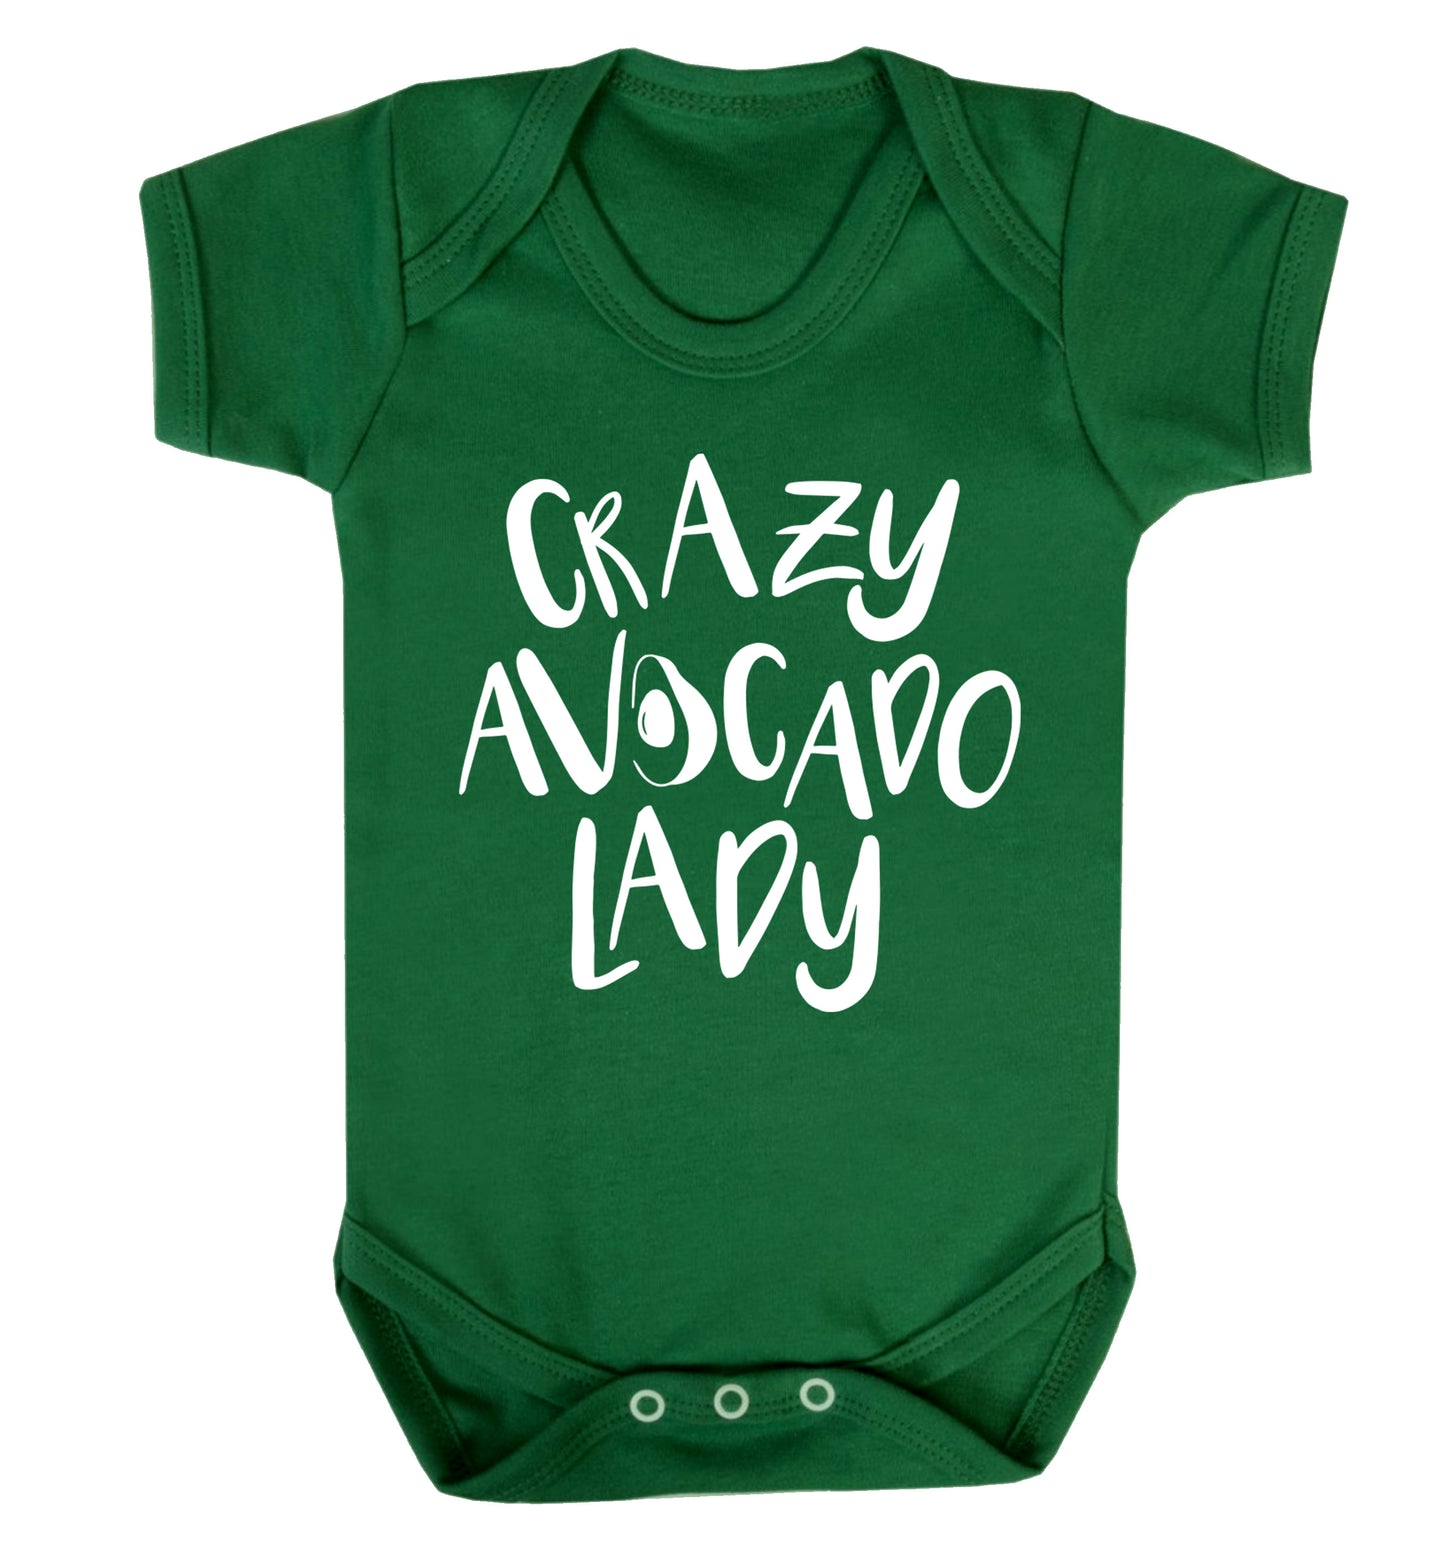 Crazy avocado lady Baby Vest green 18-24 months